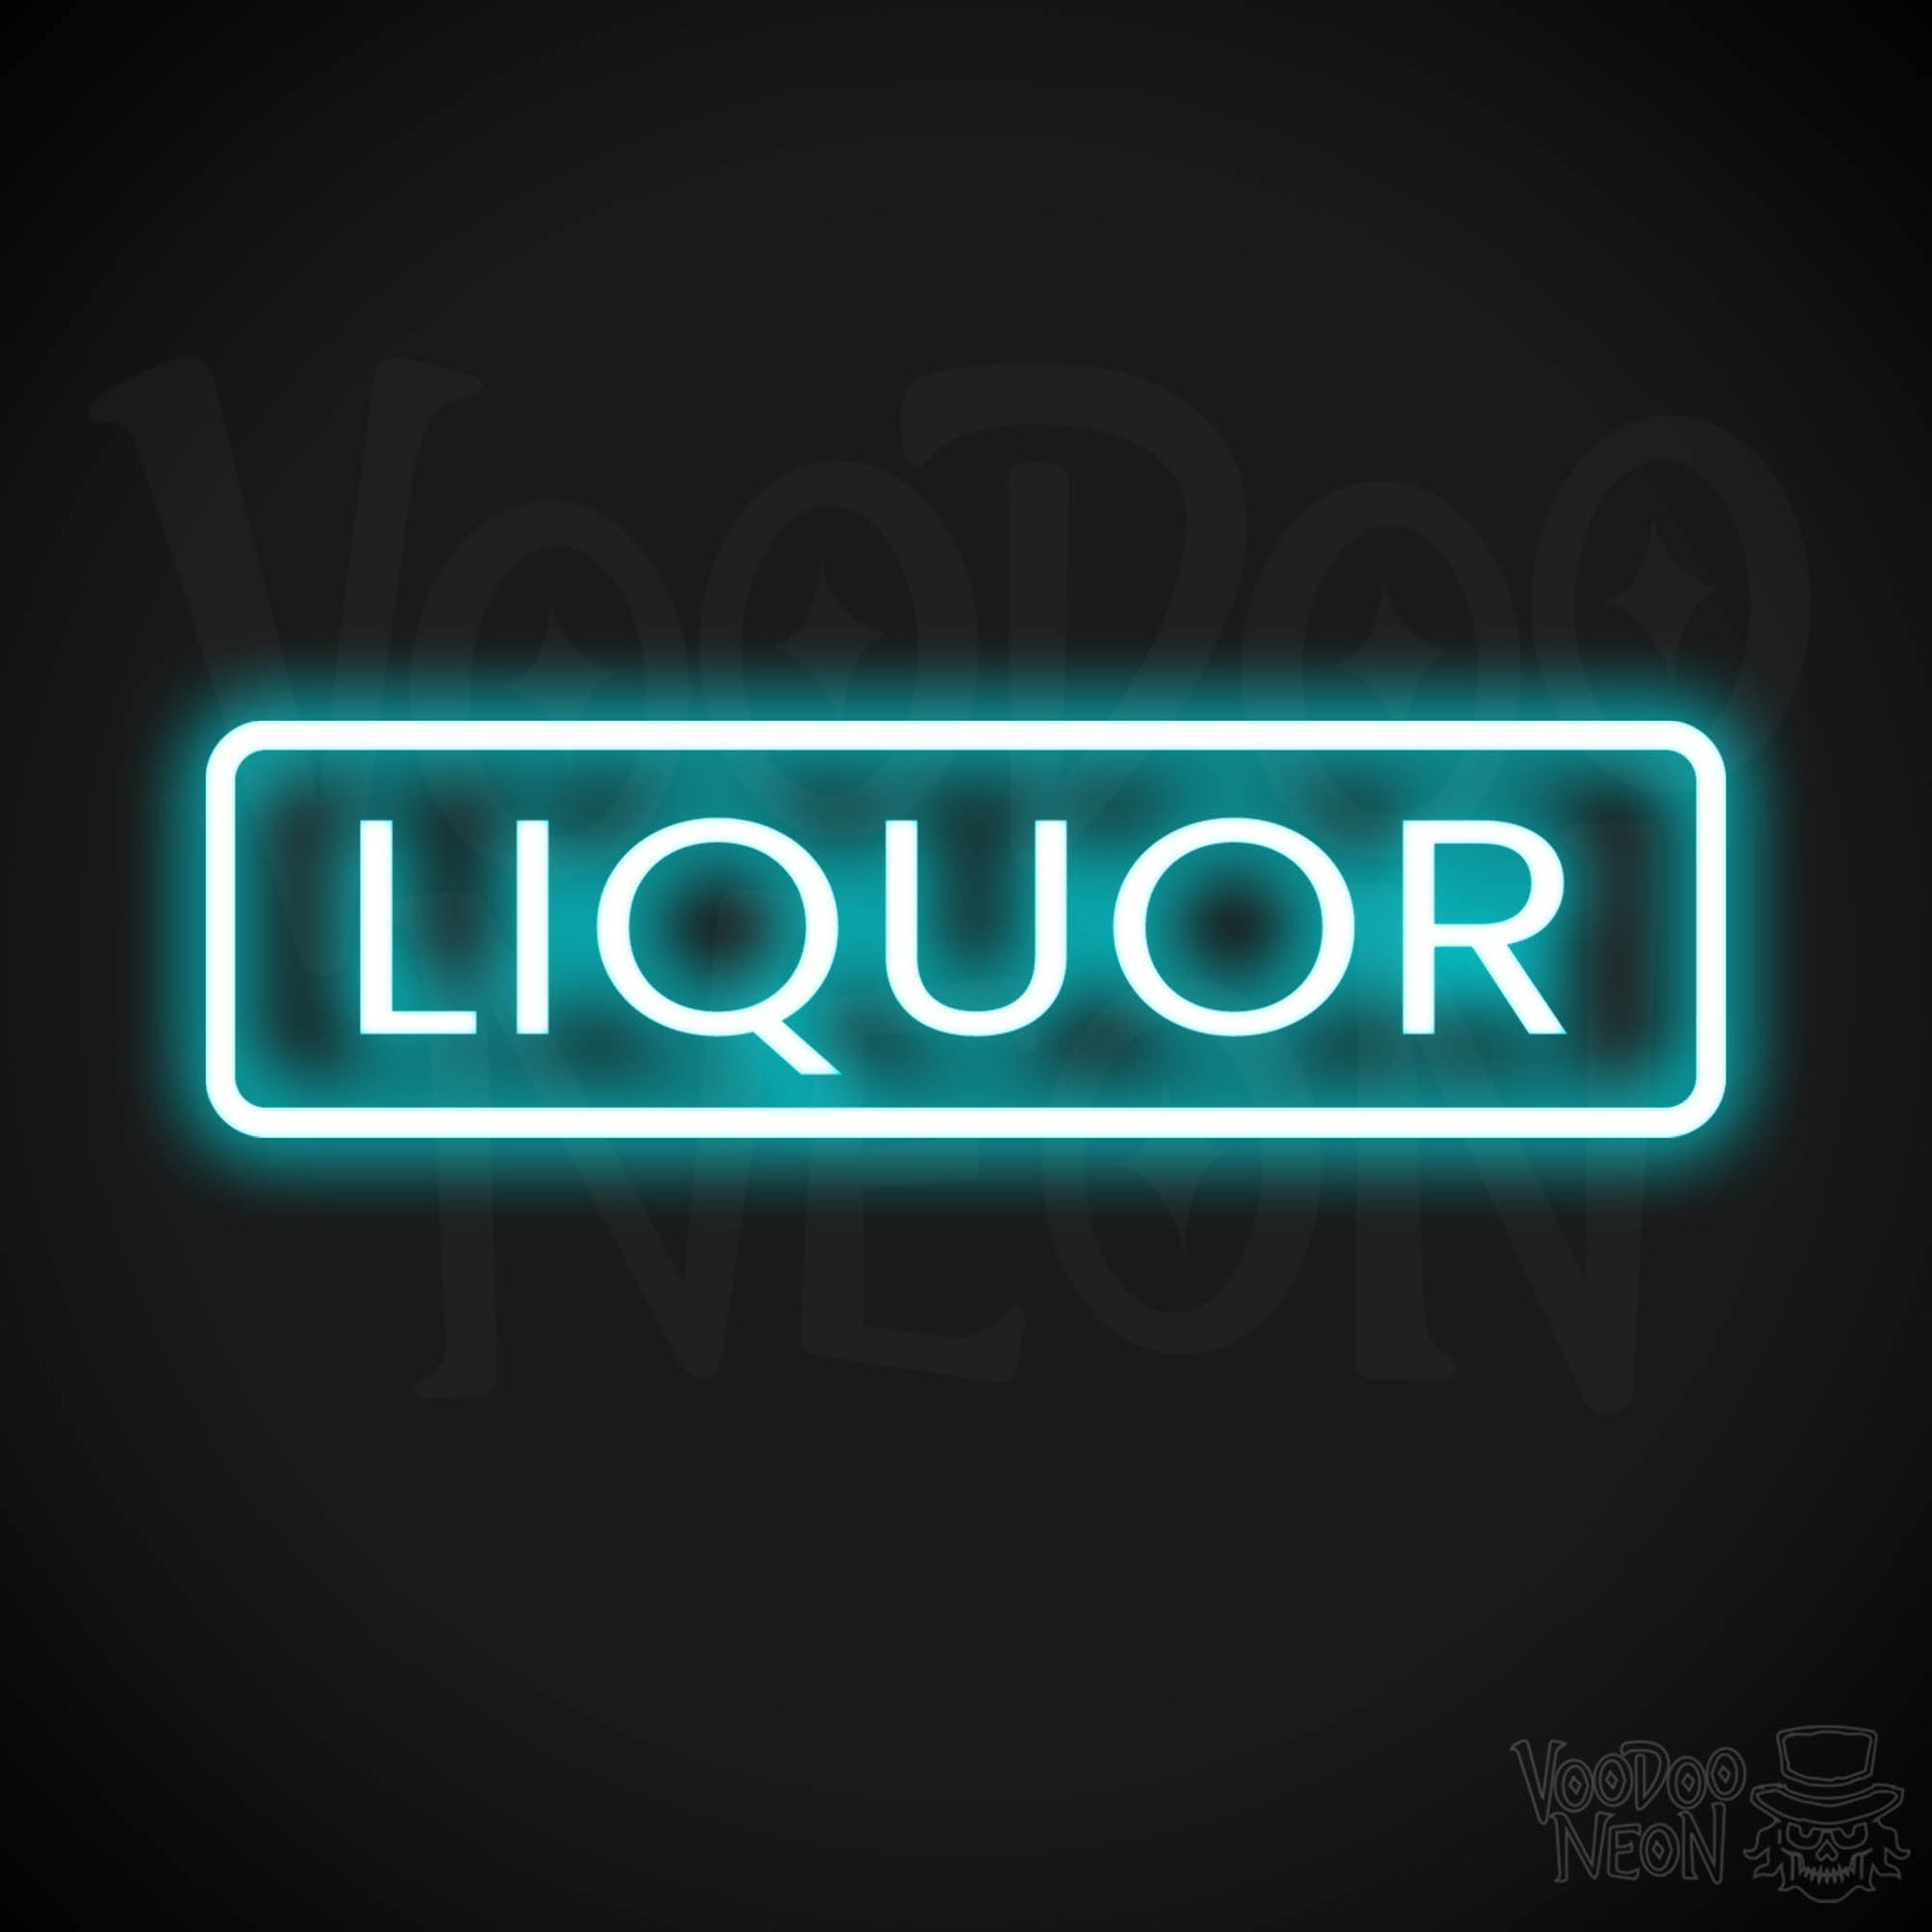 Liquor Store LED Neon - Ice Blue